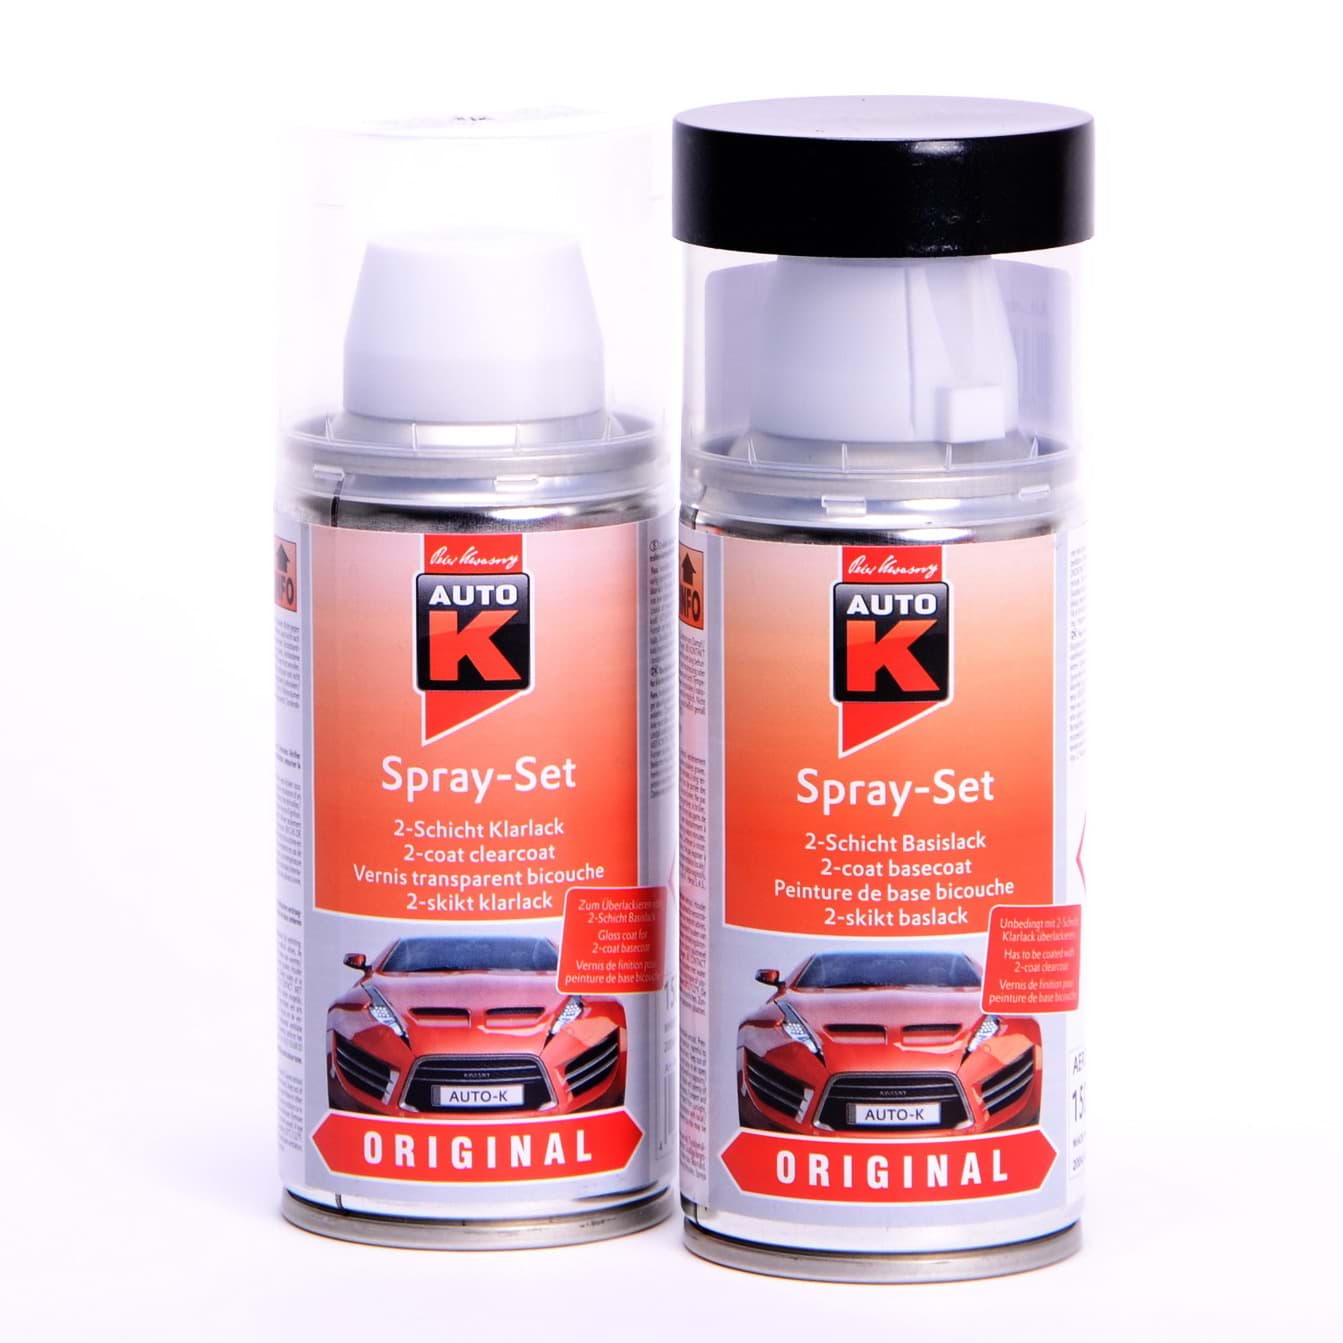 Afbeelding van Auto-K Spray-Set Autolack für Opel 359 Dschungelgrün met 21384